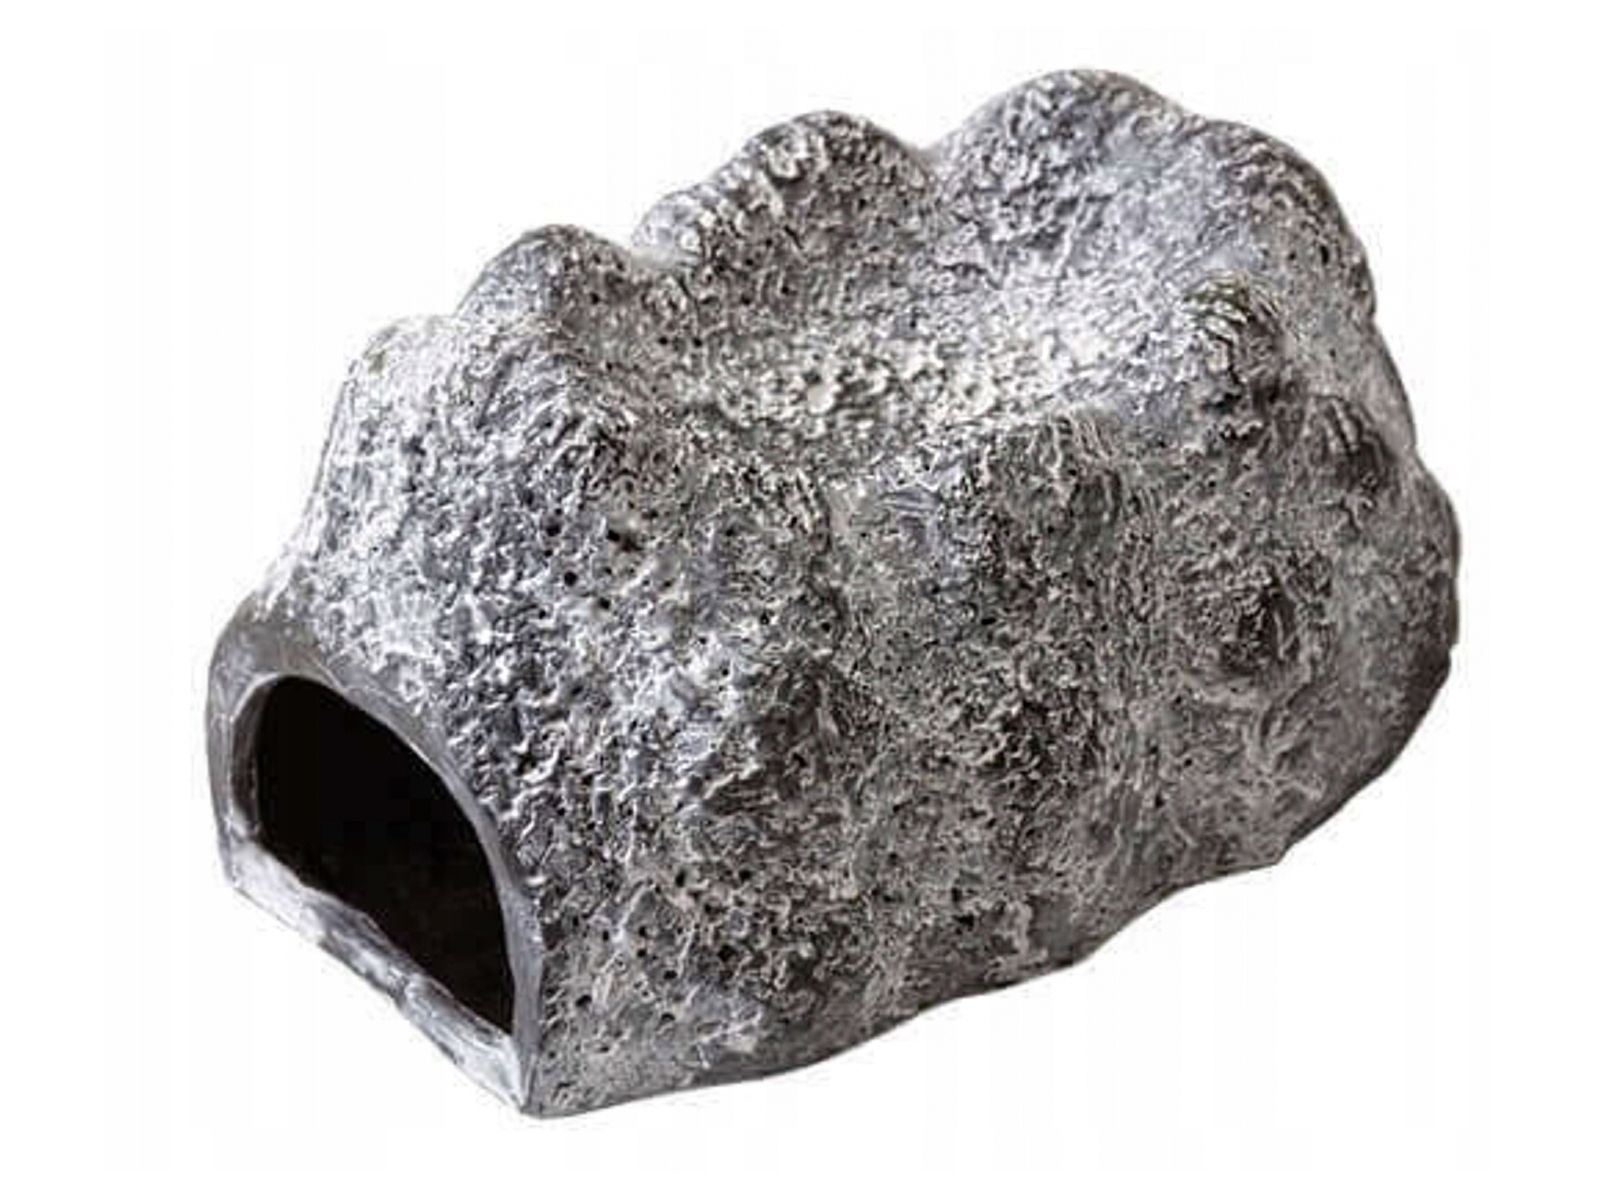 Wet Rock MEDIUM - Wilgotna jaskinia ceramiczna średnia EXO TERRA EX-1725 39,99 zł